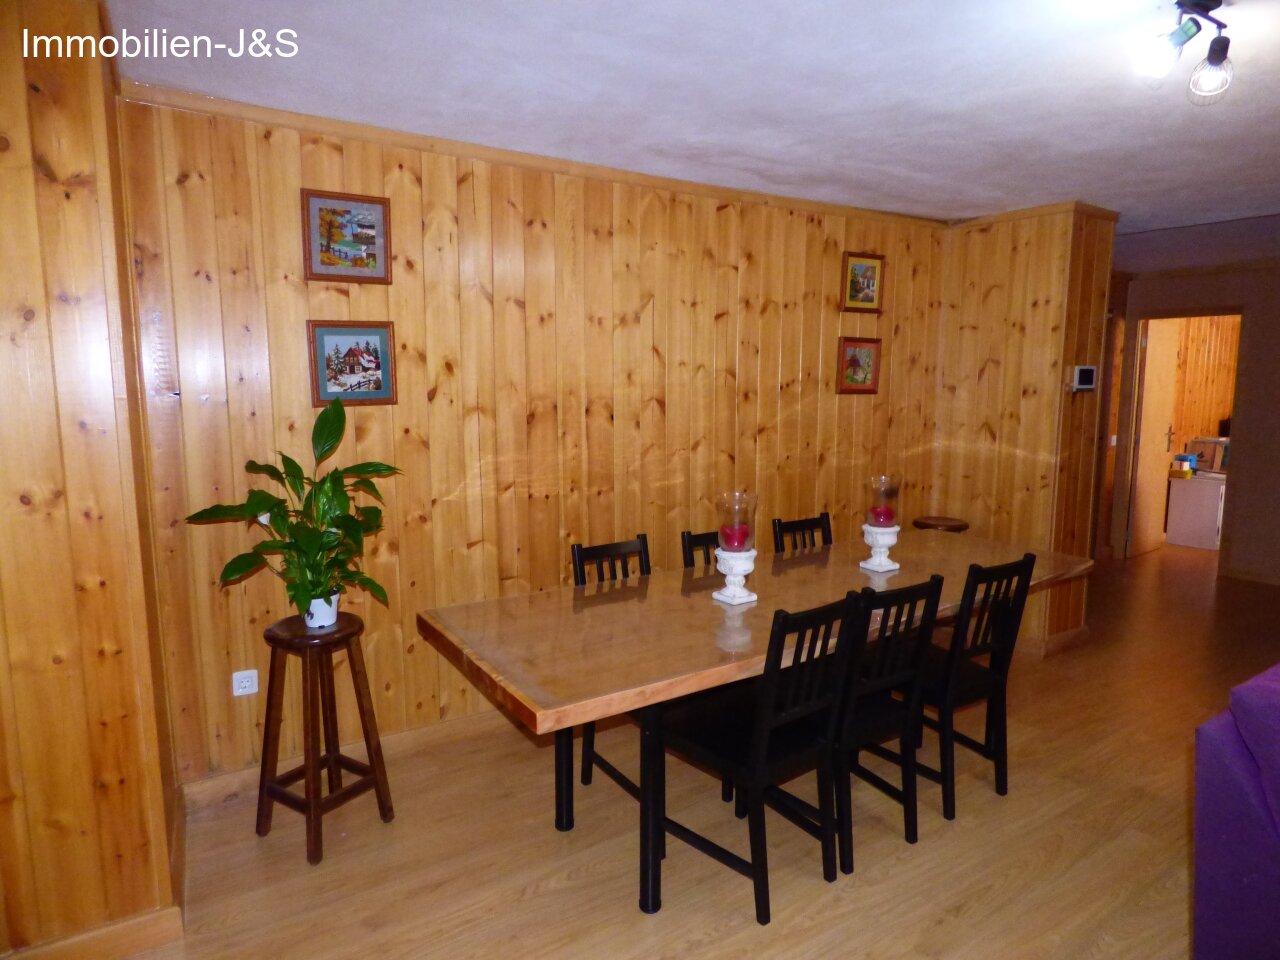 Dining area lower floor